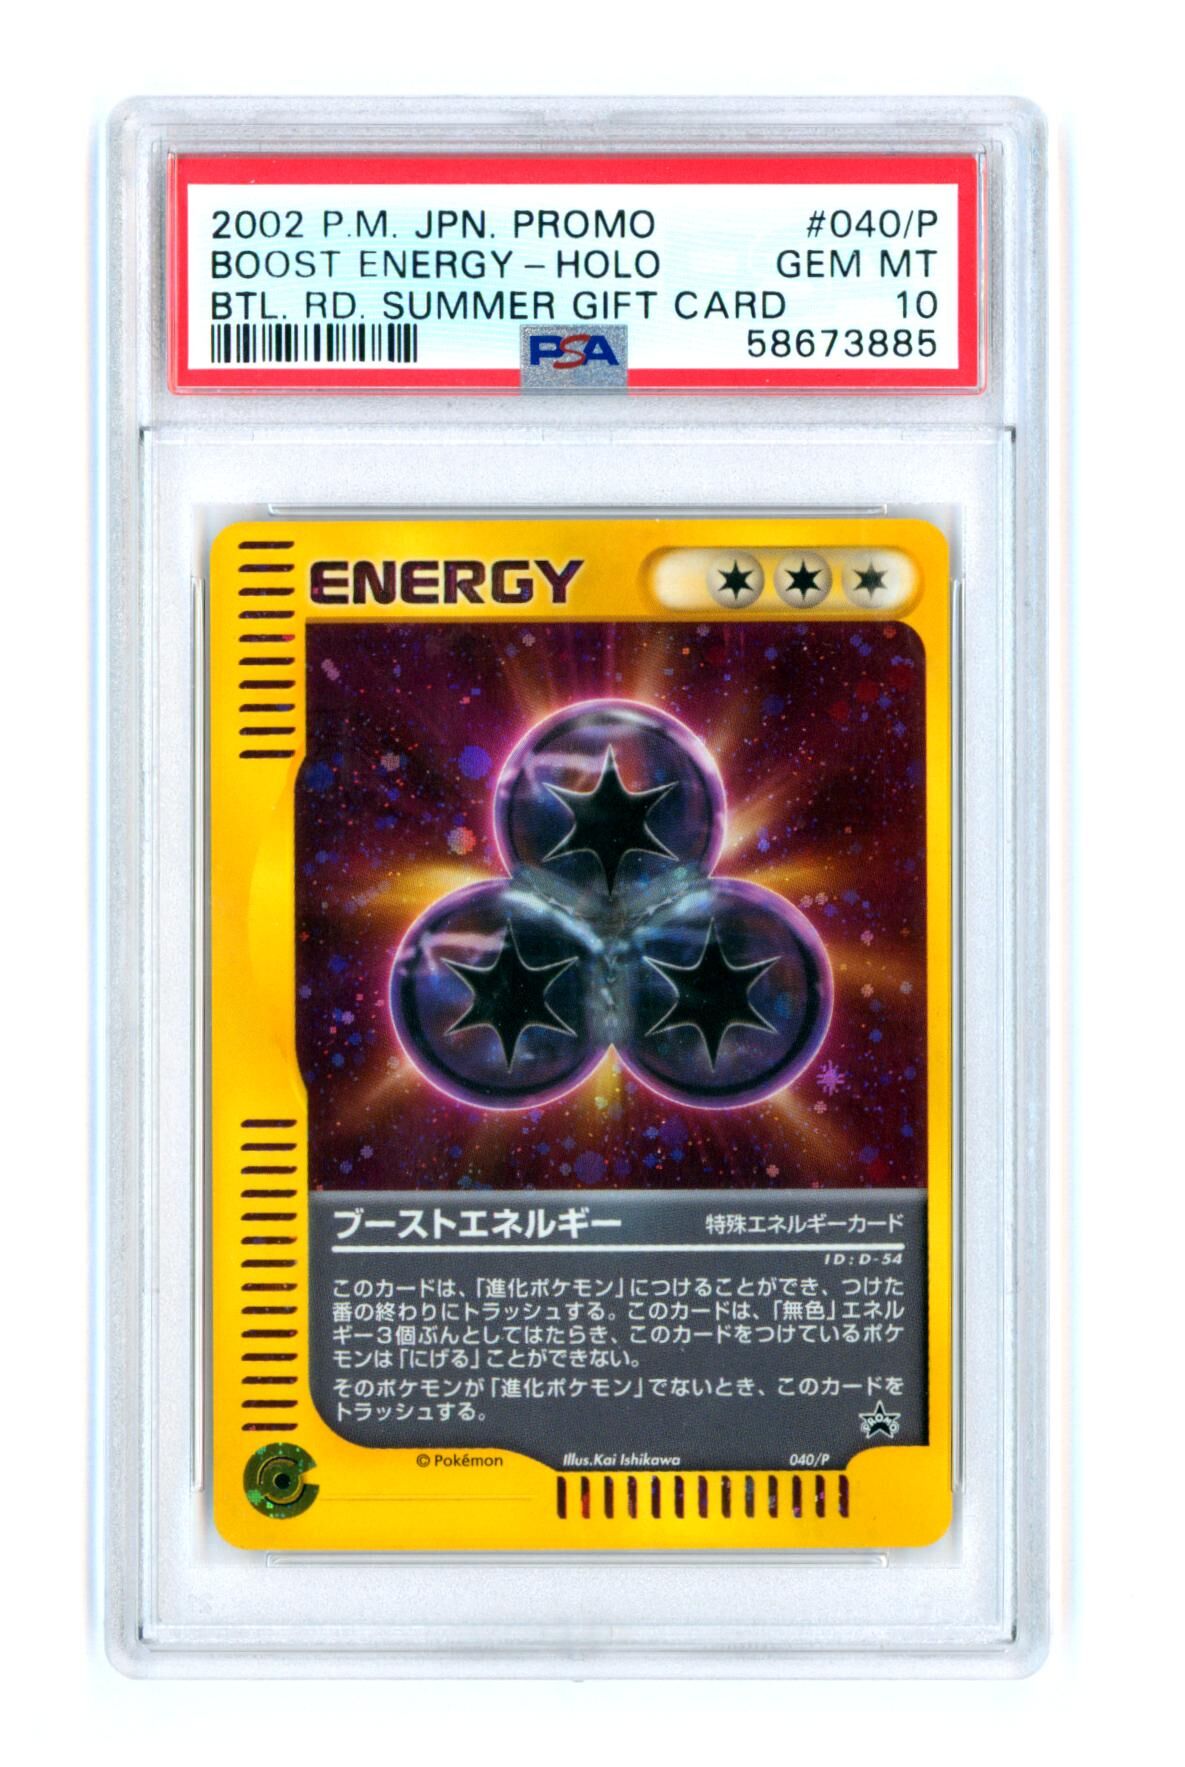 Boost Energy #040/P - BTL. RD. Summer Gift Card - Japanese Promo - Holo - PSA 10 GEM MT - Pokémon